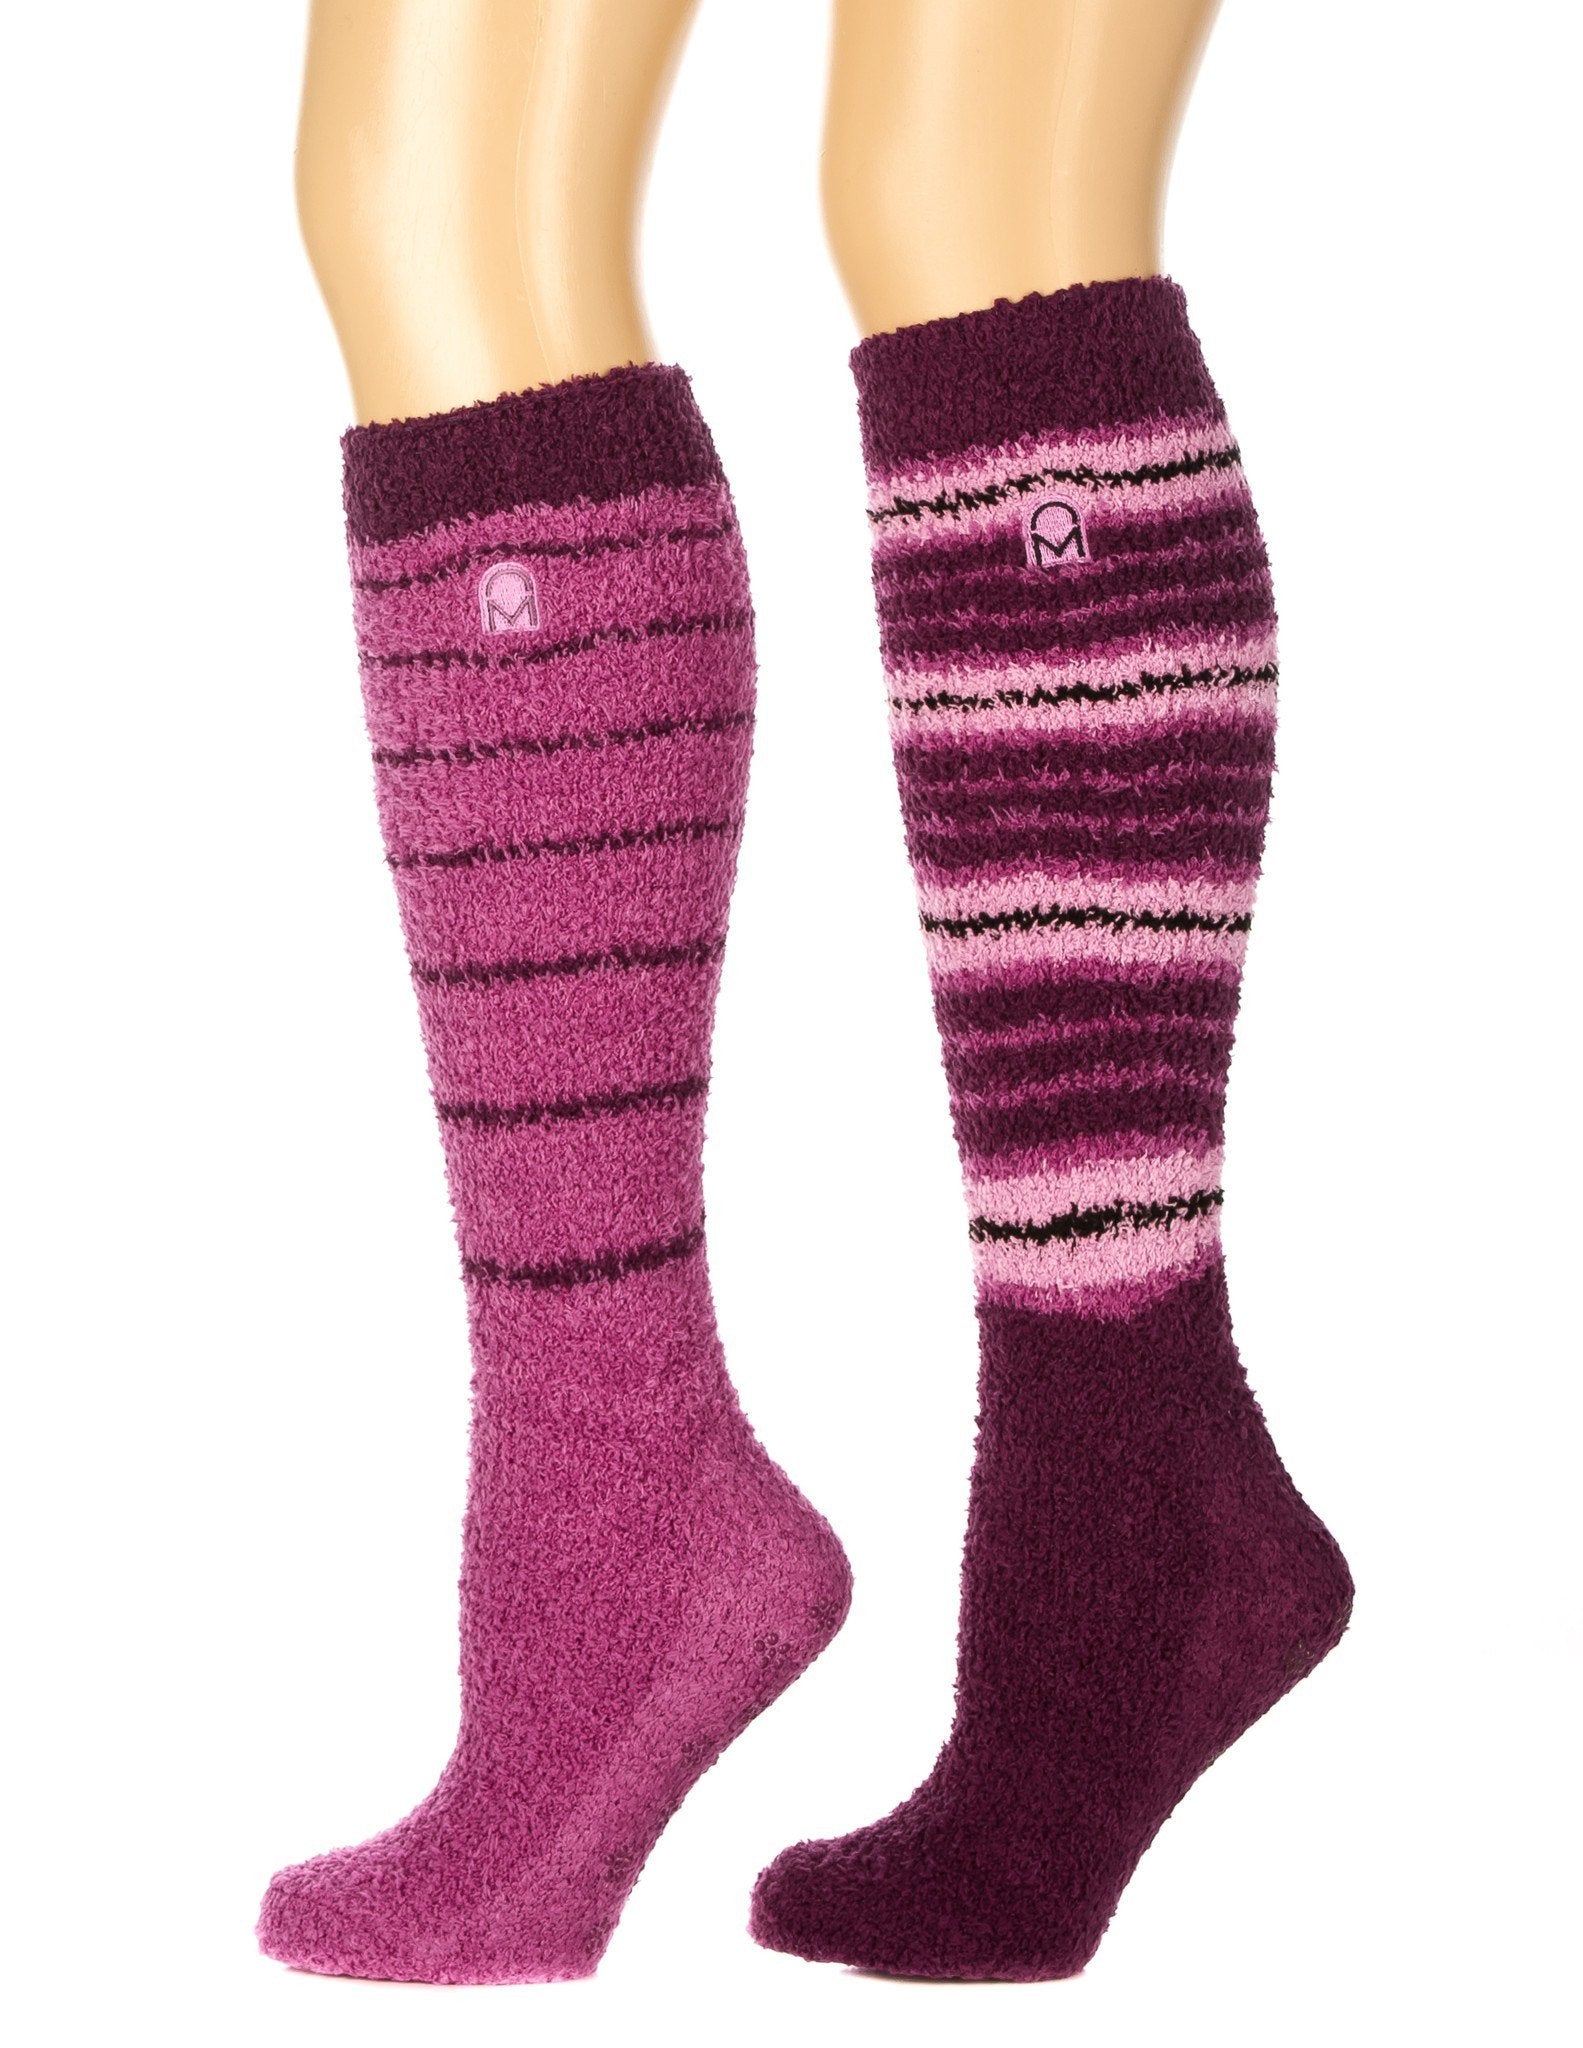 Women's (2 Pairs) Soft Anti-Skid Fuzzy Winter Knee High Socks - Set A1